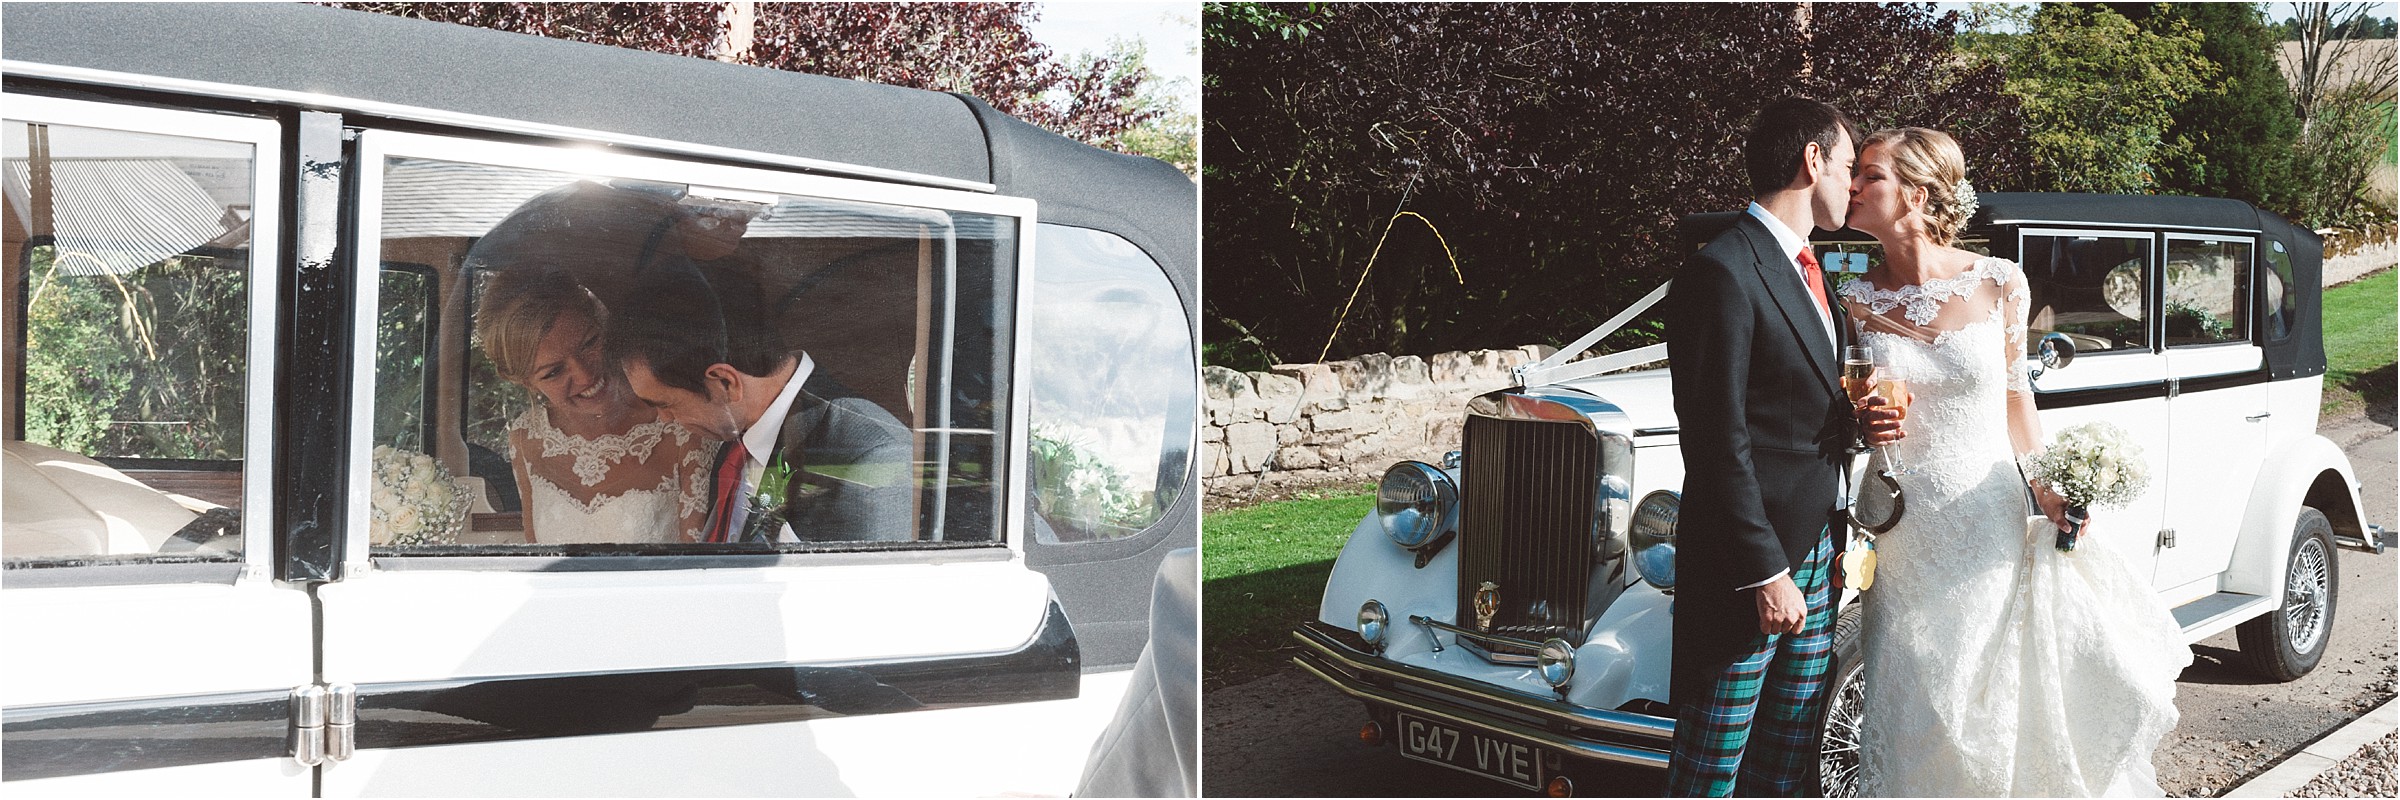 bride & groom arrive in vintage car doxford barns northumberland